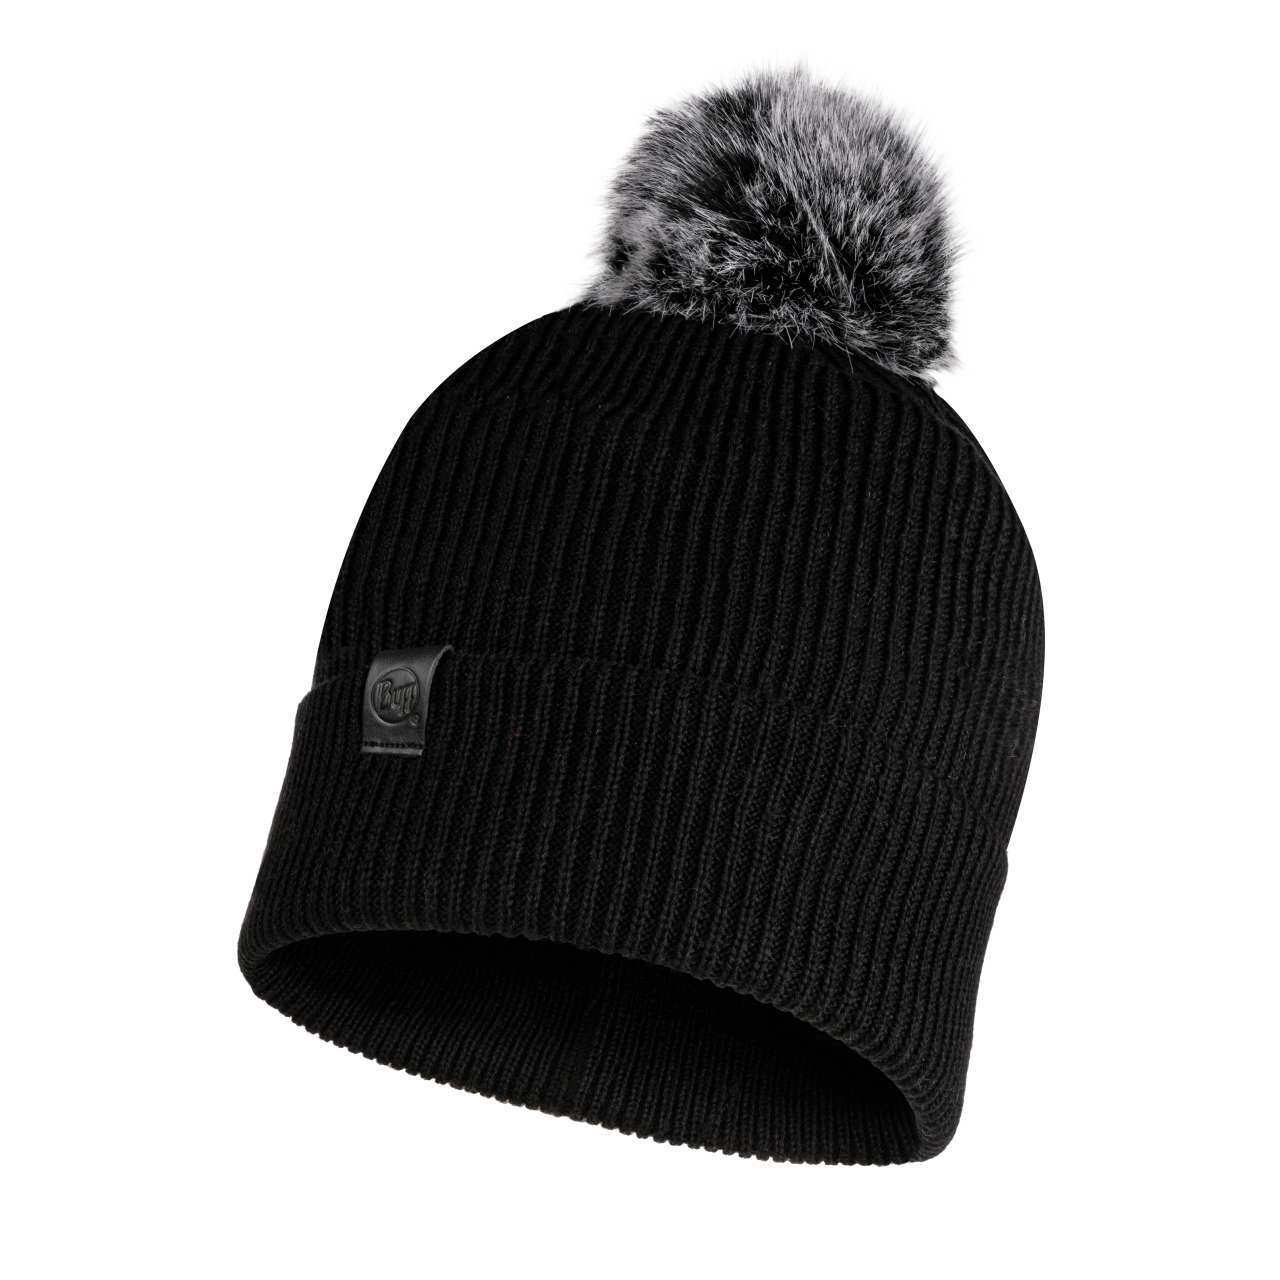 Купить Шапка BUFF Knitted Hat Kesha Black